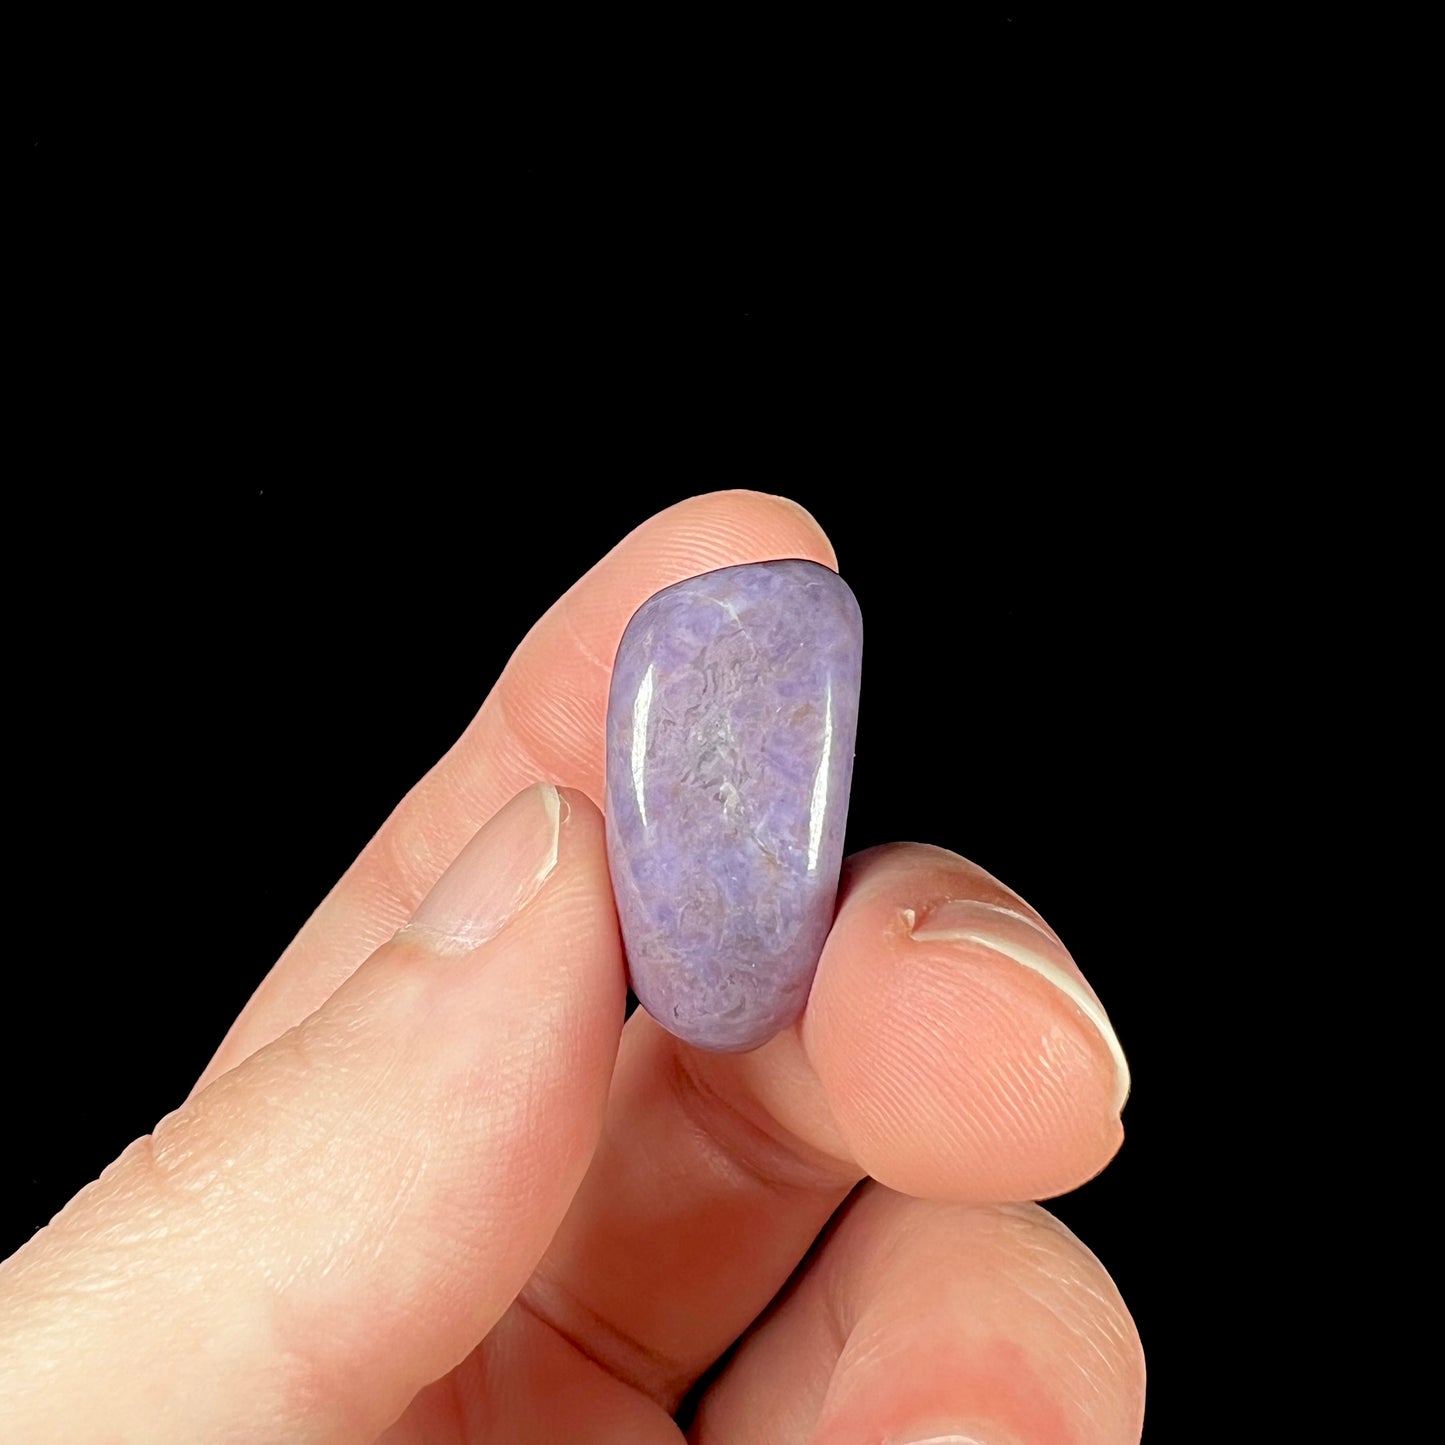 A tumble polished piece of purple turkiyenite jade stone.  Material from Bursa, Turkey.